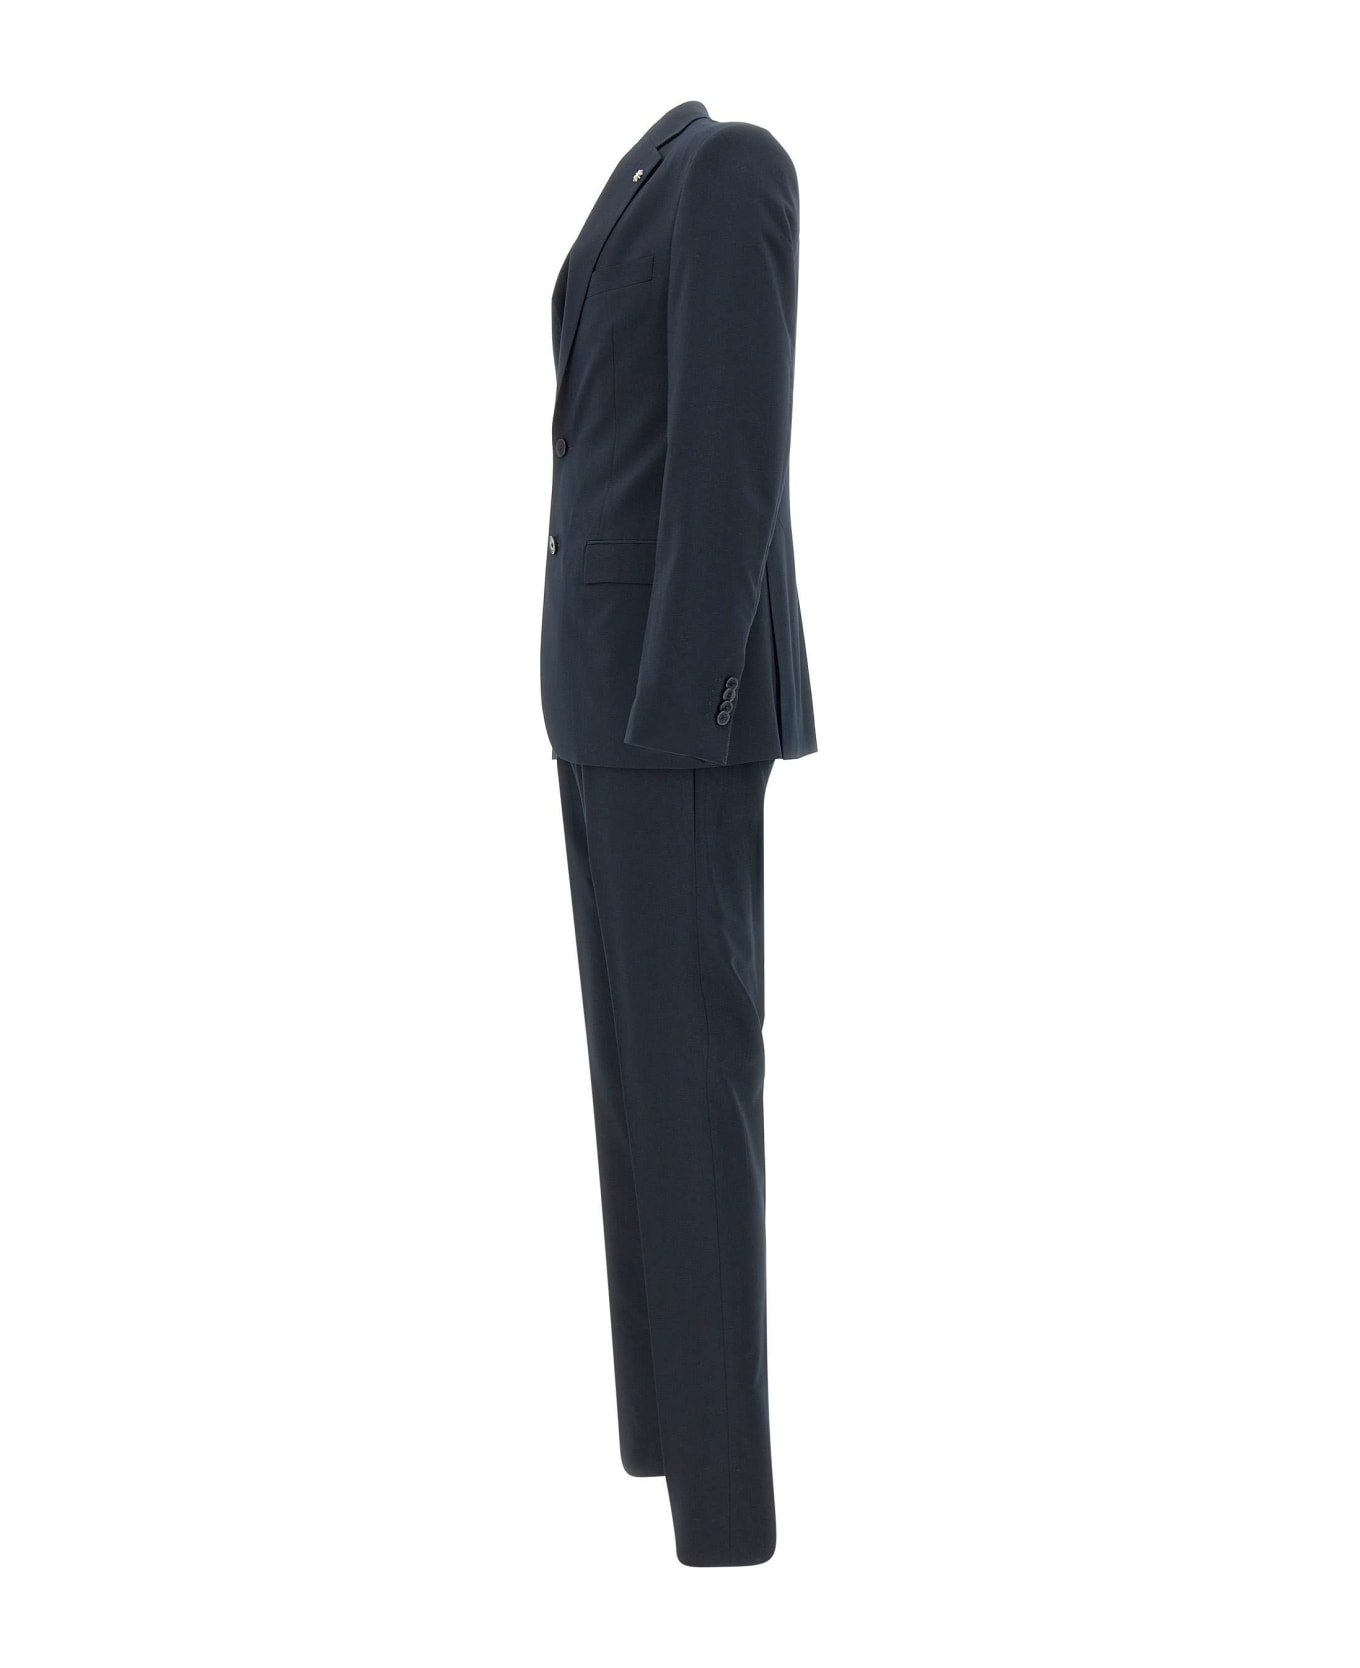 Manuel Ritz Viscose Two-piece Suit - Nero